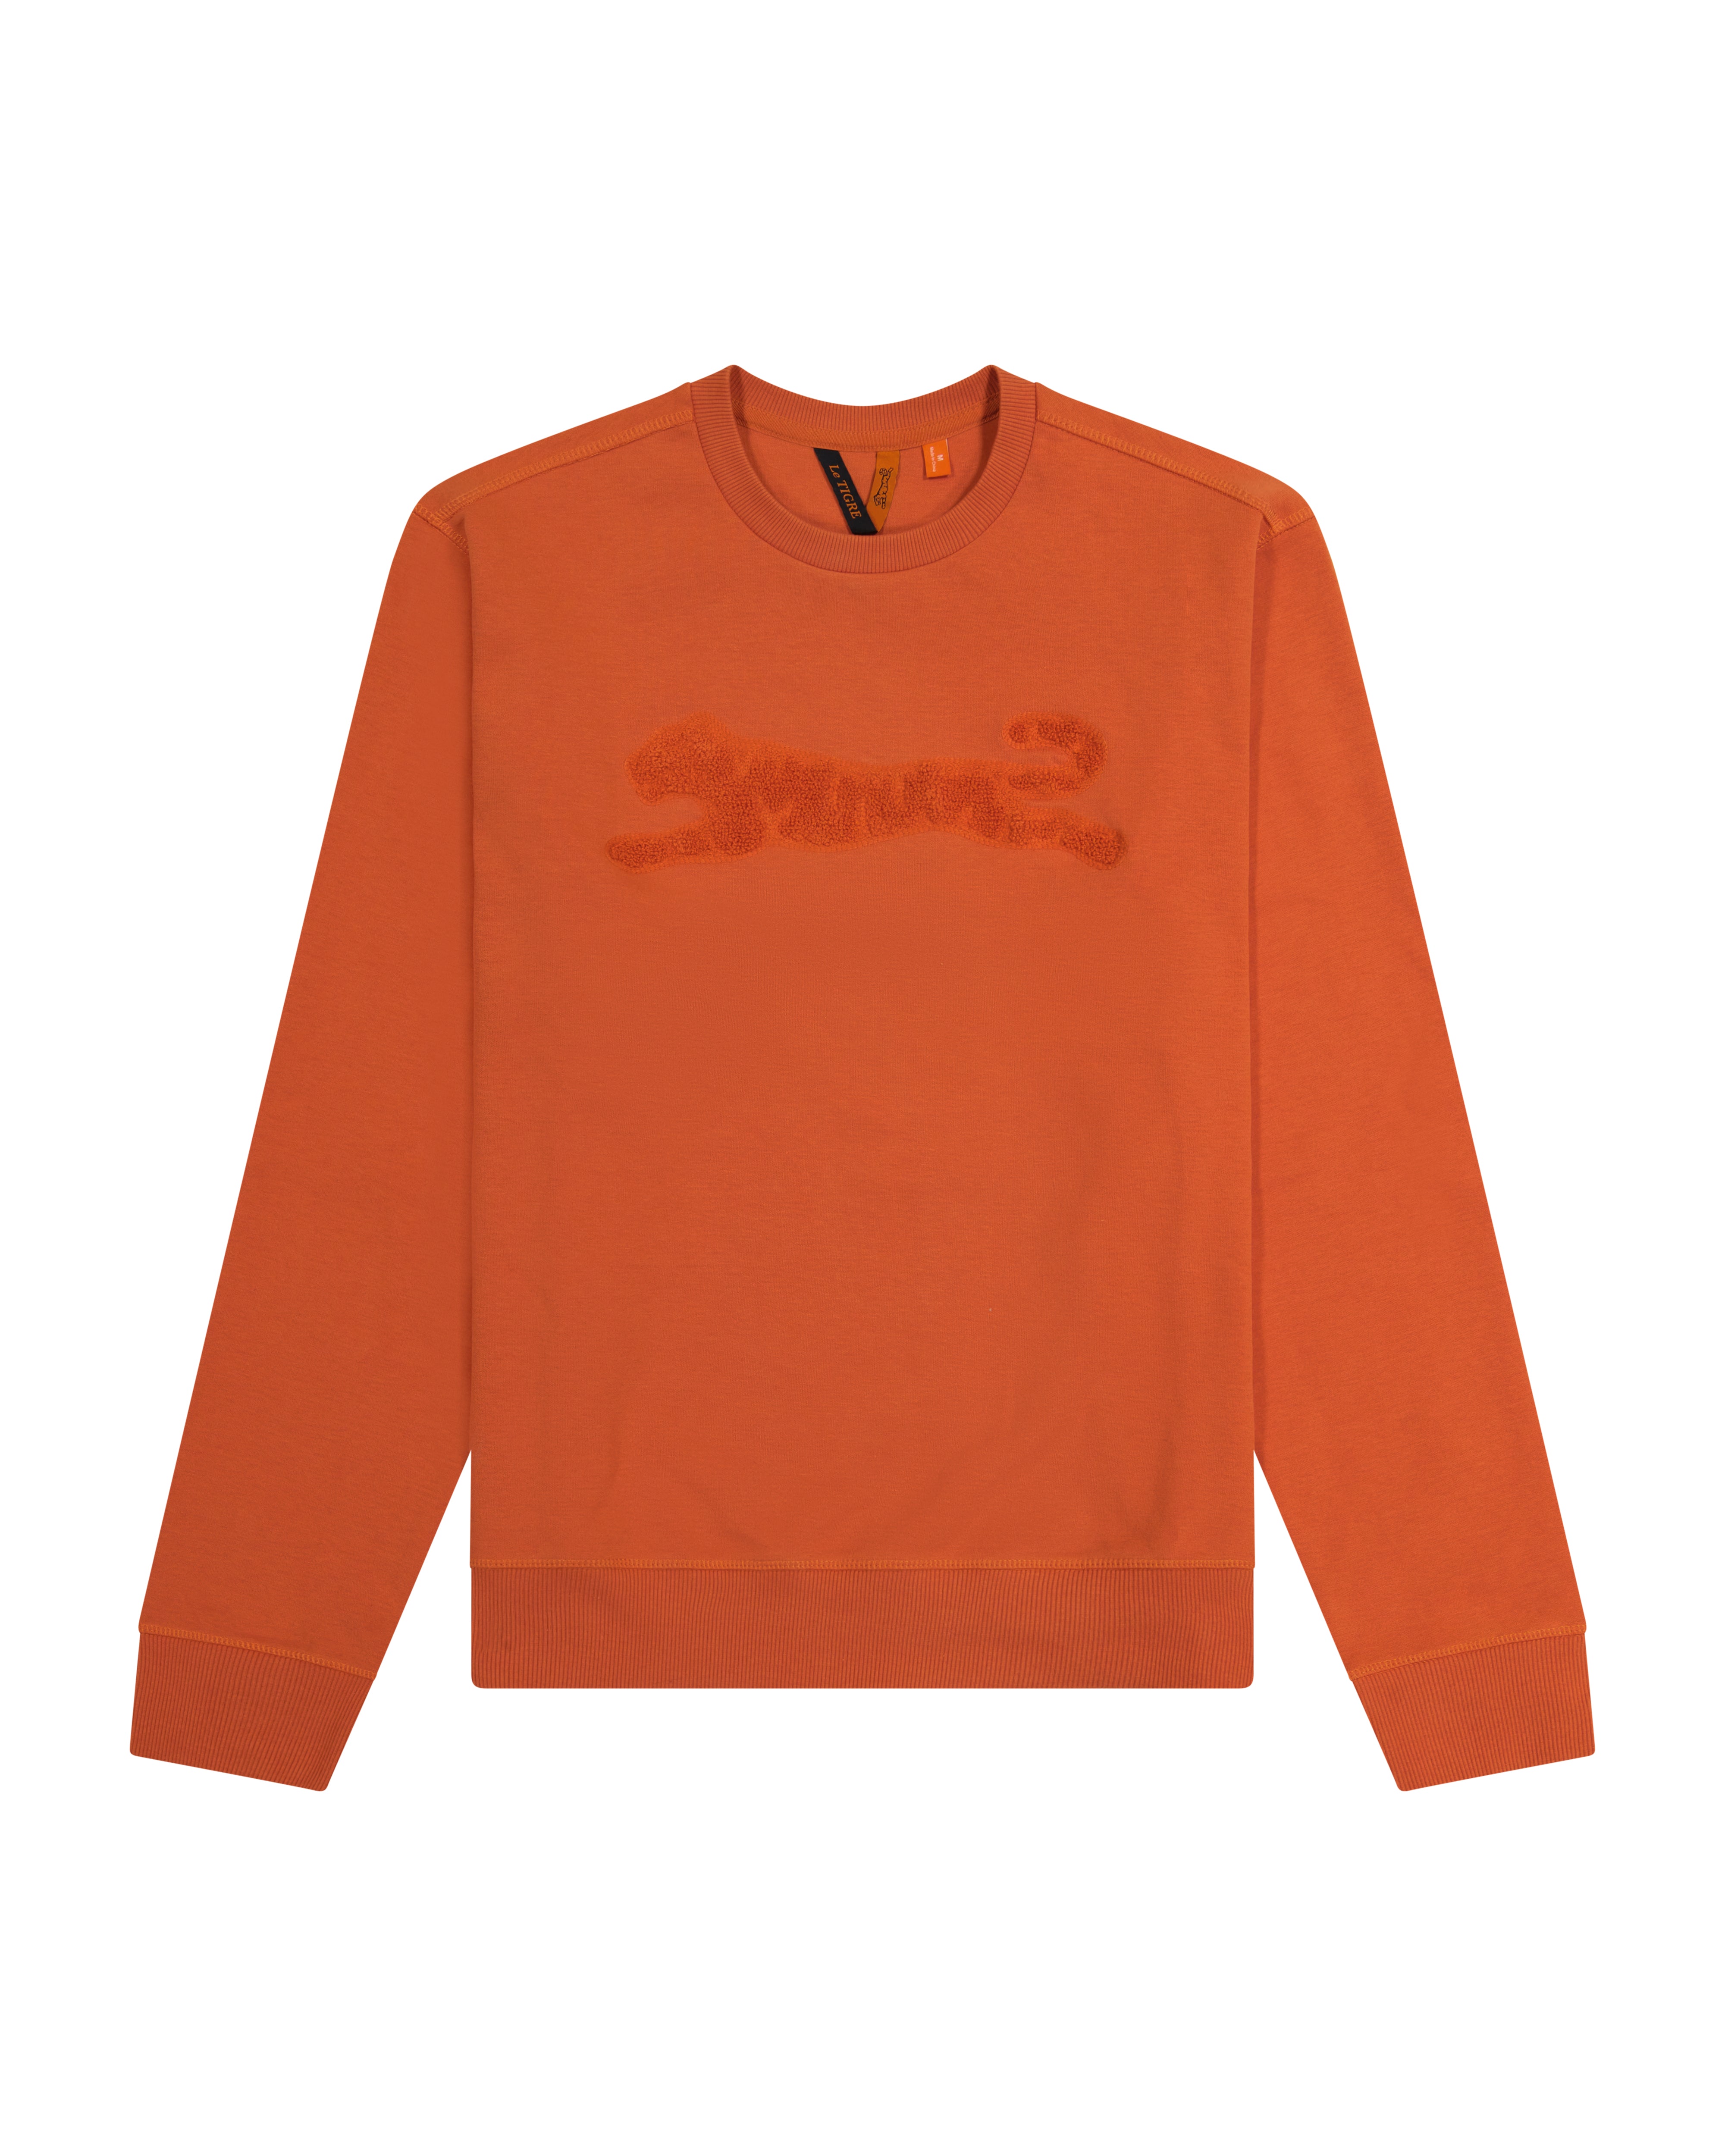 Unisex Sweatshirt Red Orange Grey L Light Heather Grey M Men Orange Red Orange S Sweatshirt unisex women XL